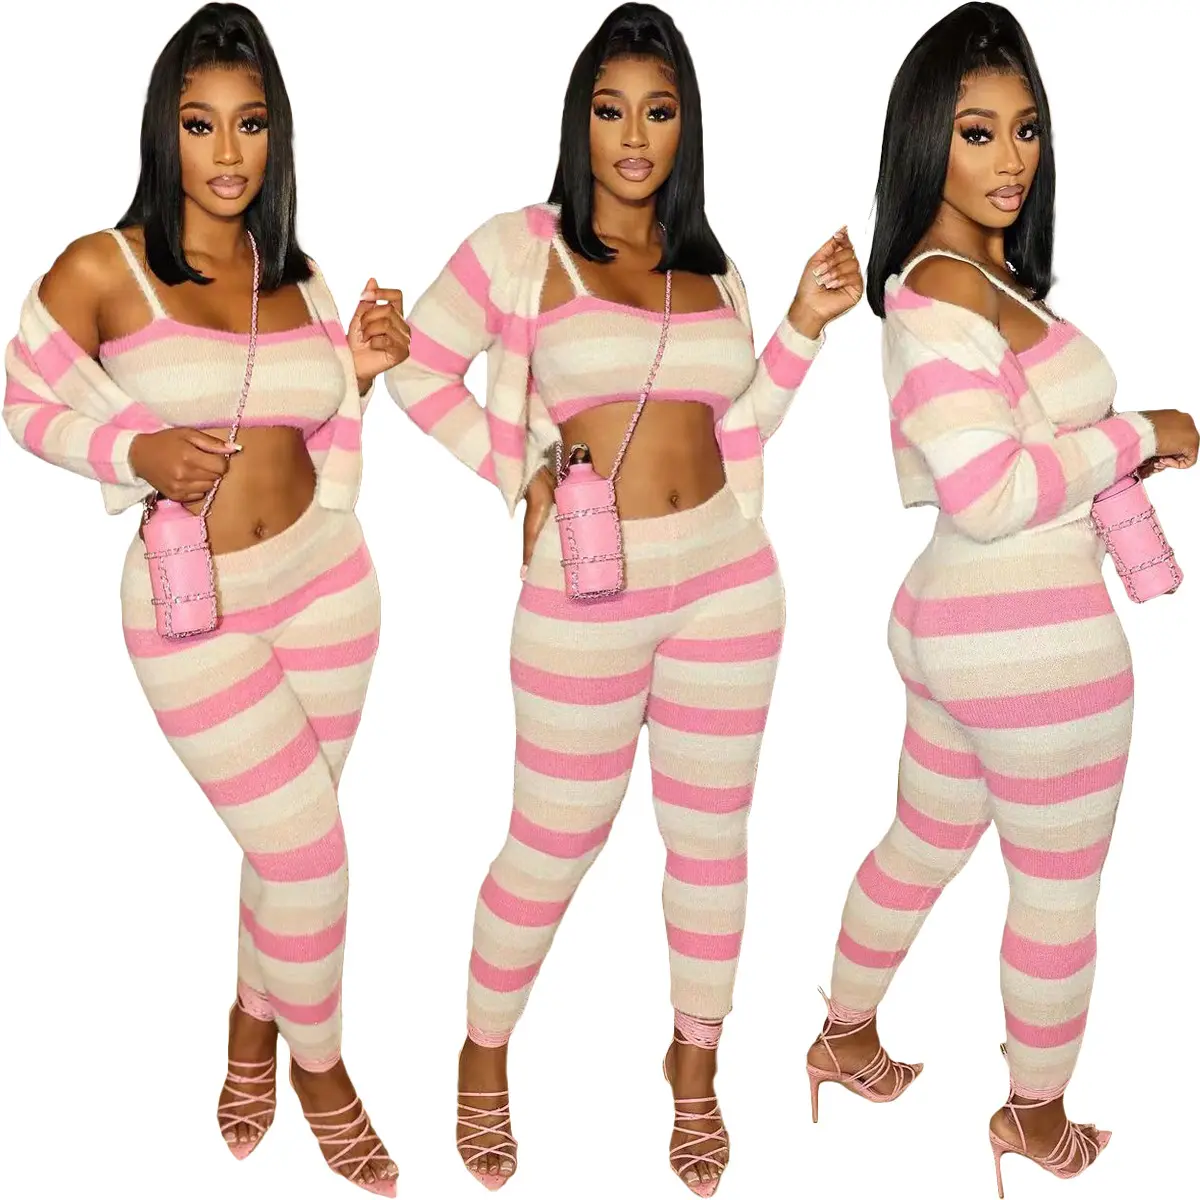 Share Herbst Damen bekleidung Casual Street Wear Pink Gestricktes dreiteiliges Set Damen pullover Set